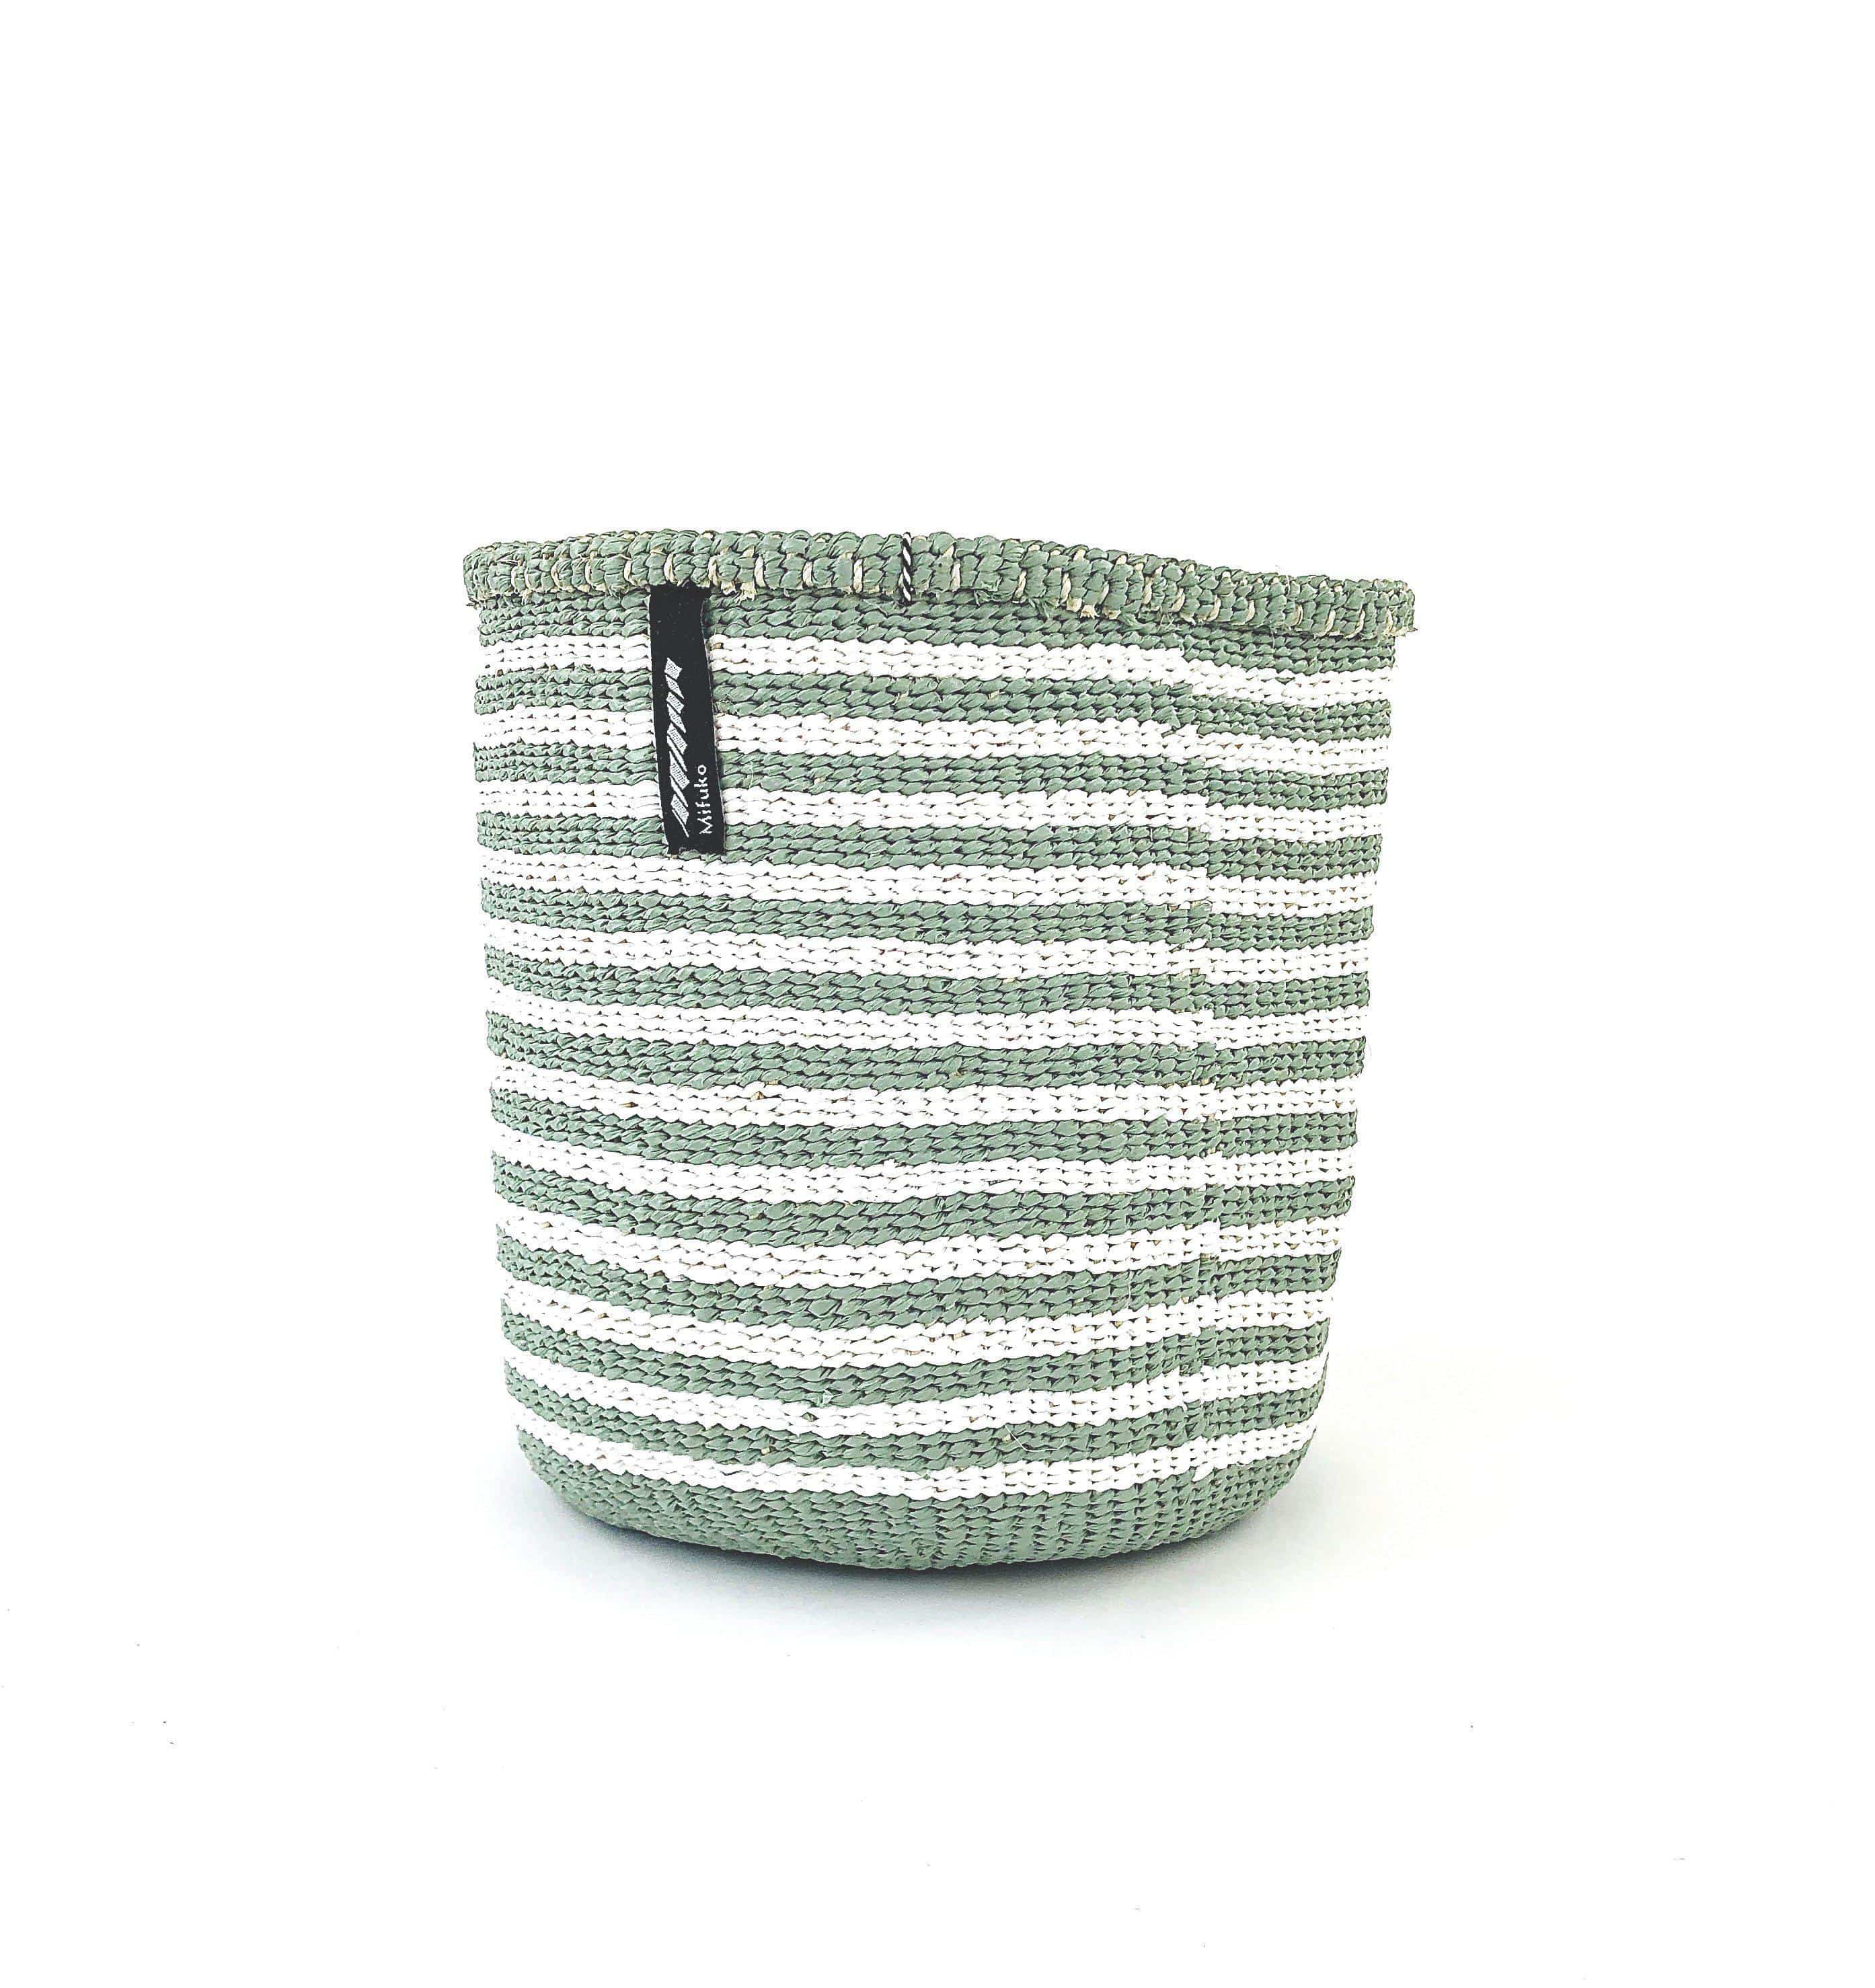 Mifuko Partly recycled plastic and sisal Small basket S Kiondo basket | Thin light green stripes S